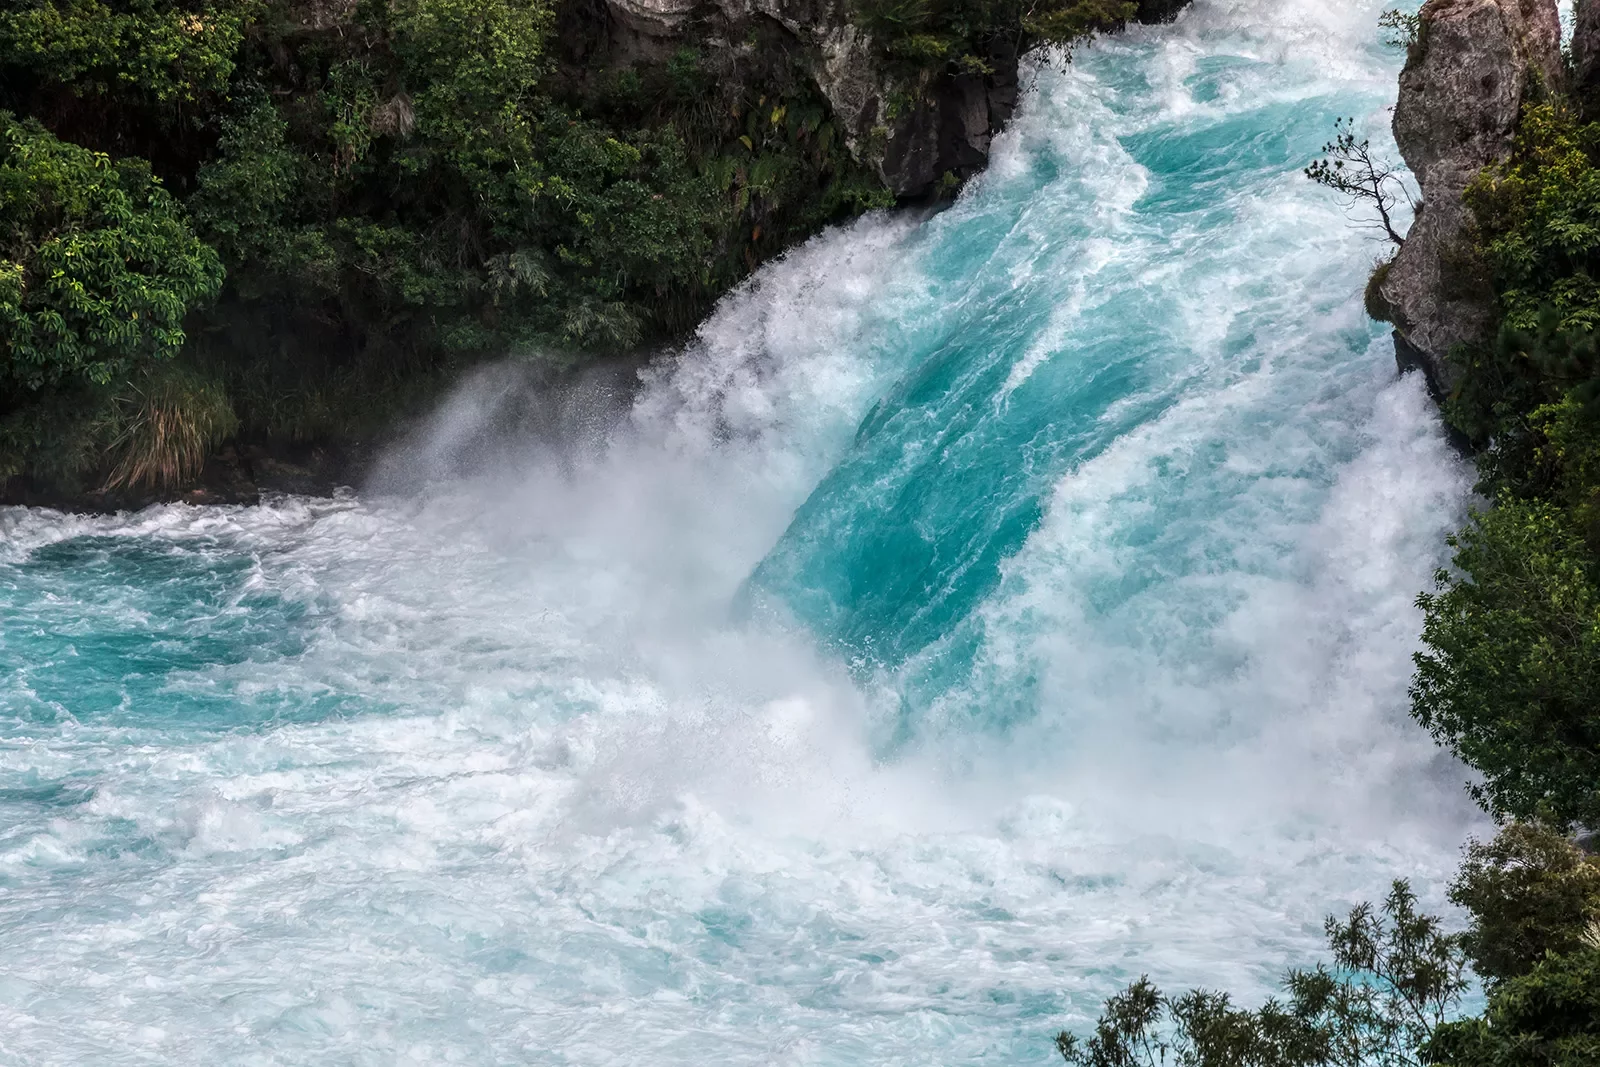 Wide shot of vibrant blue rushing waterfall.